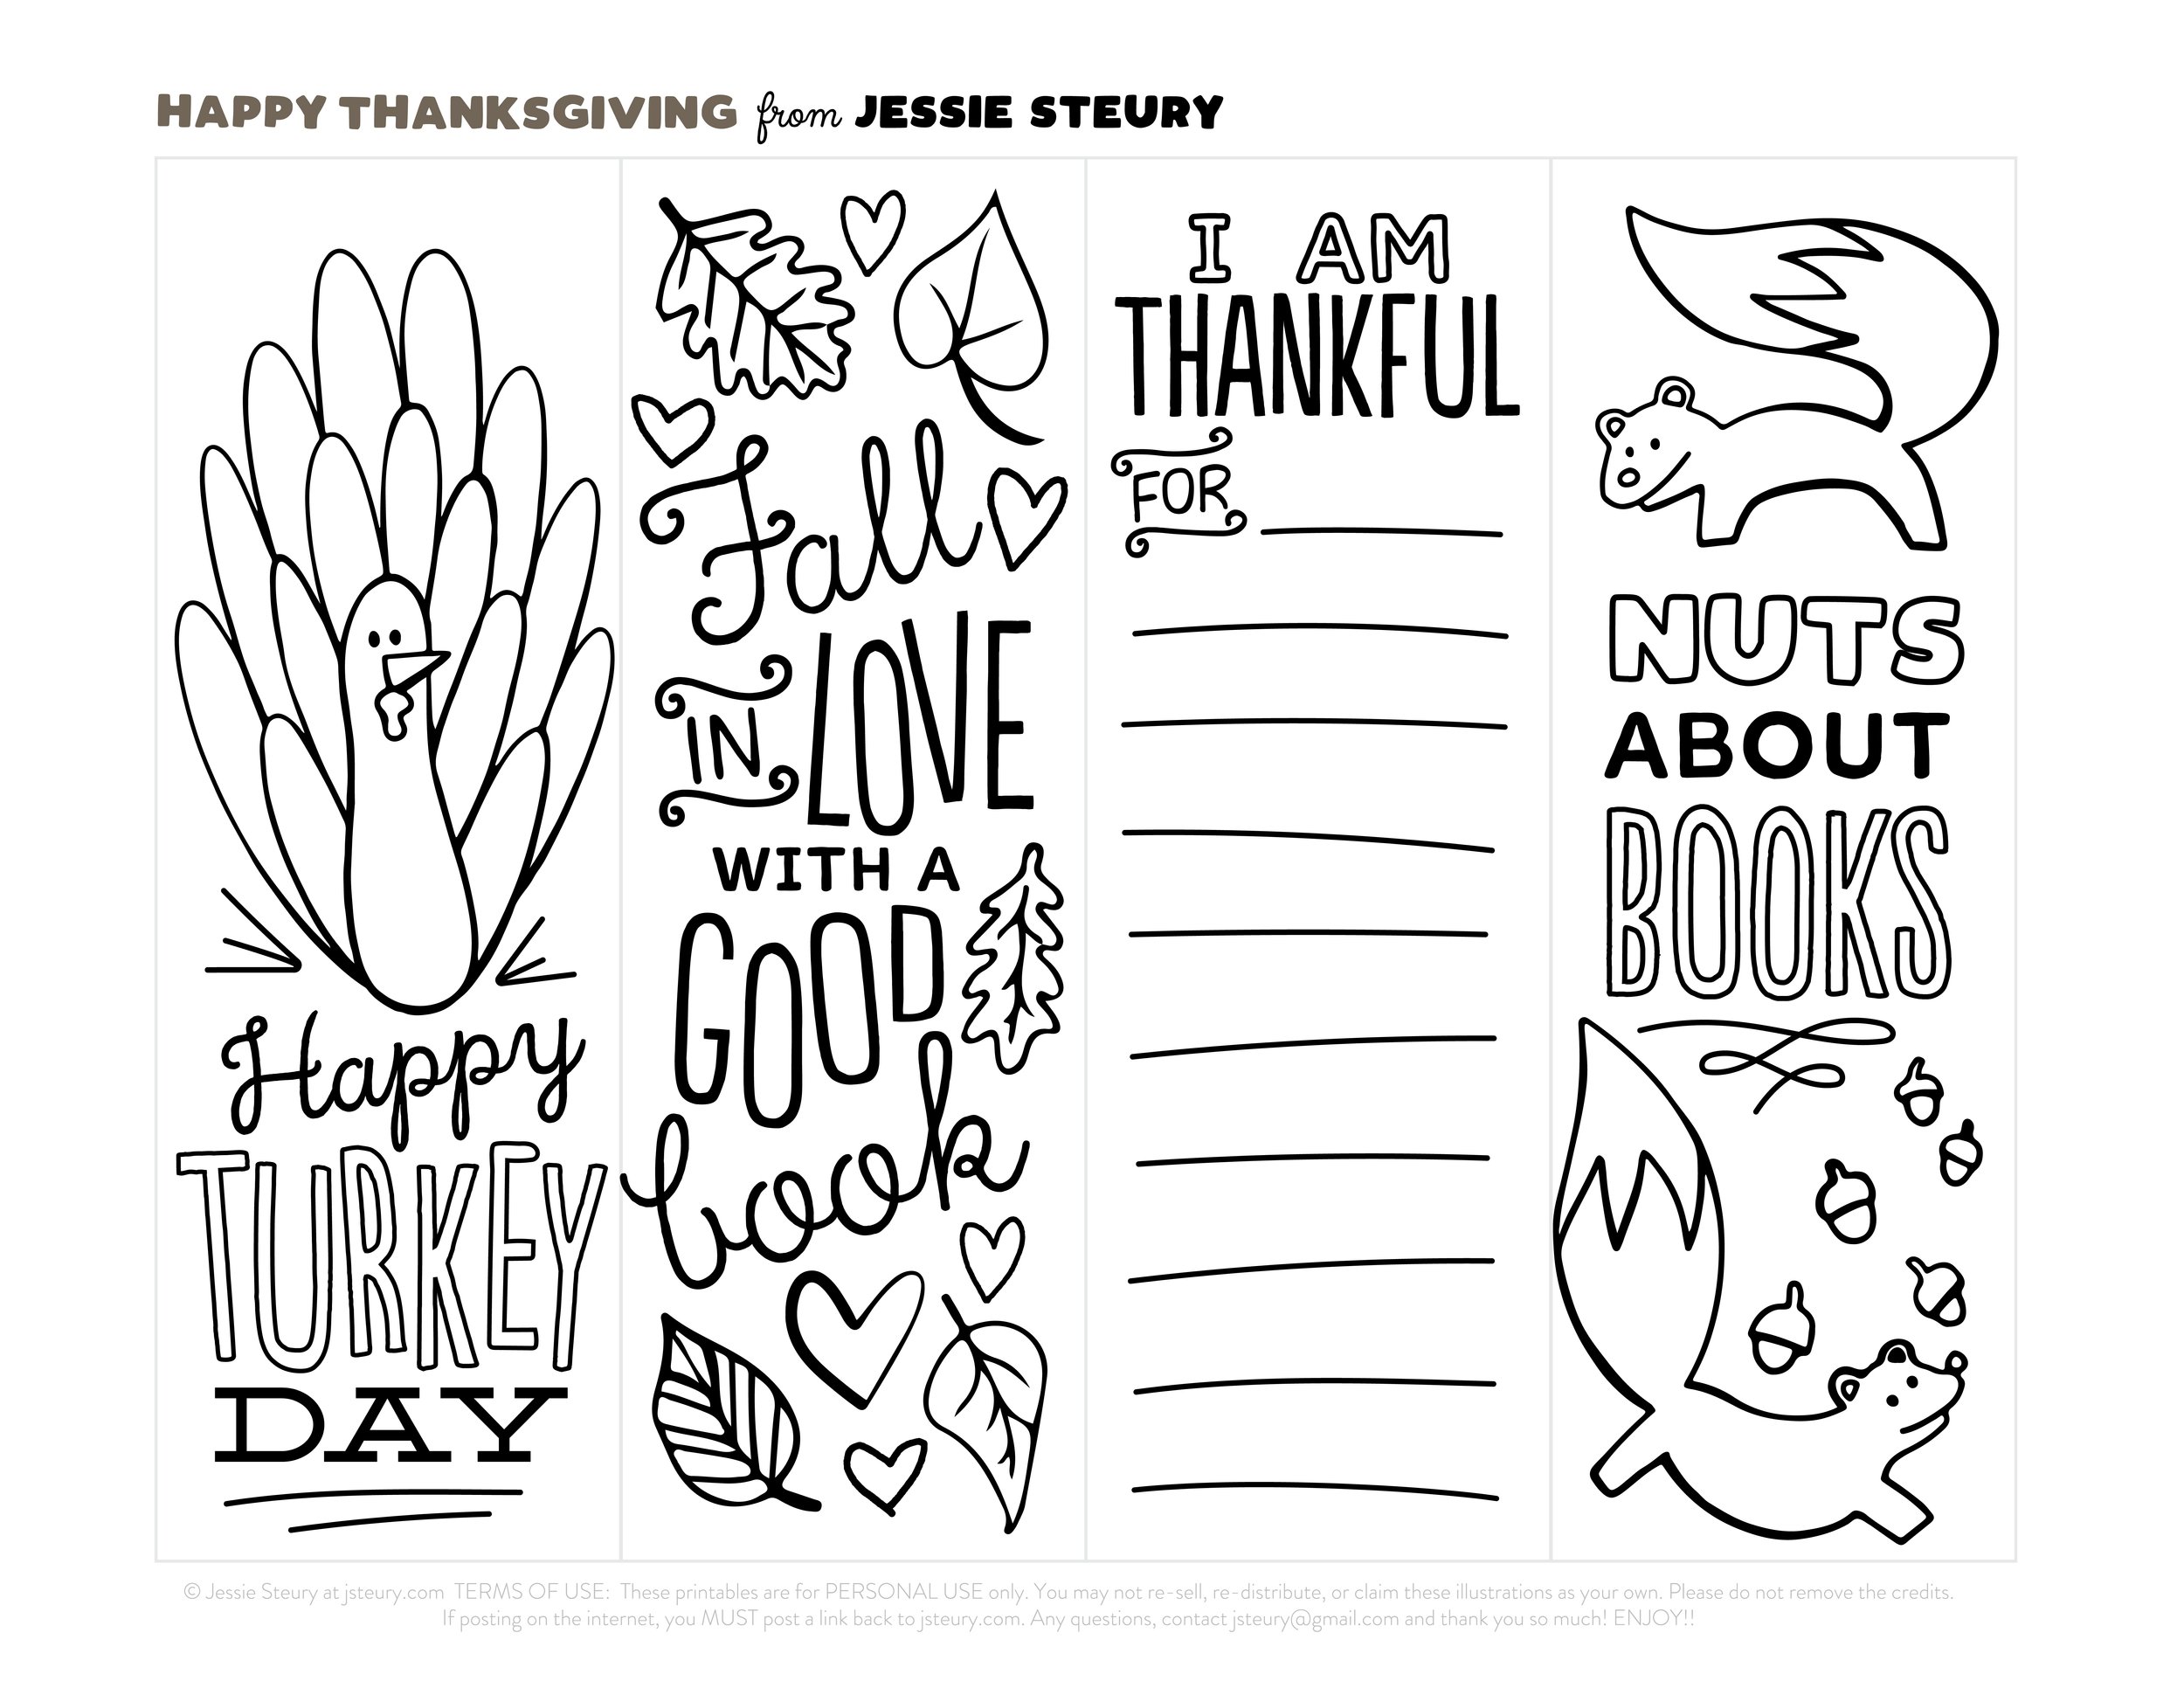 jsteury-thanksgiving-bookmarks-22.jpg